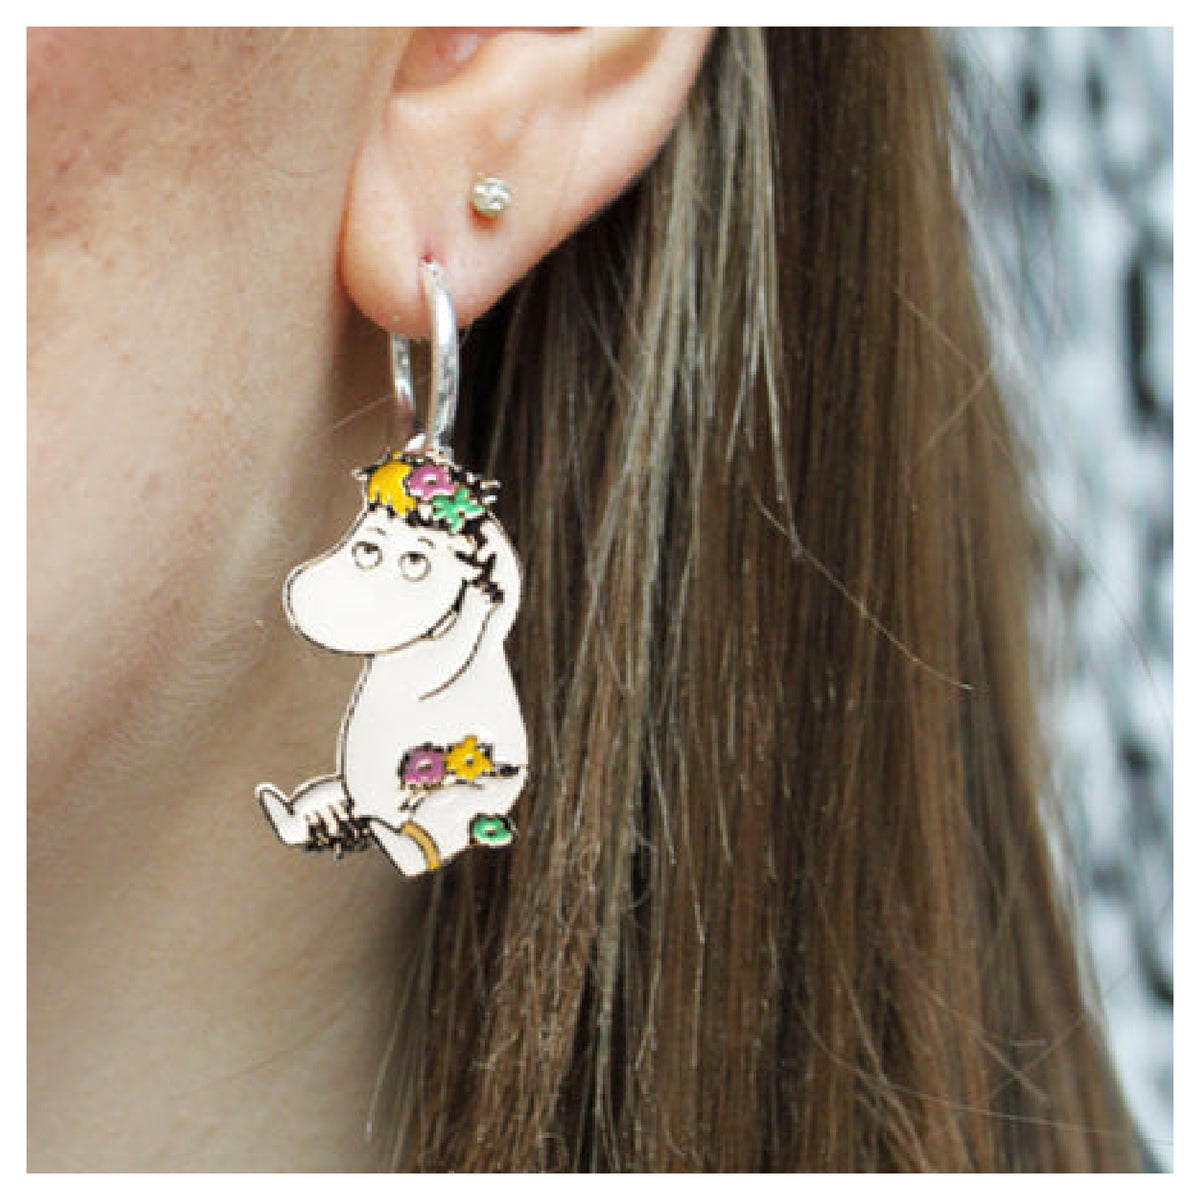 Enamel Earrings Moomintroll and Snorkmaiden